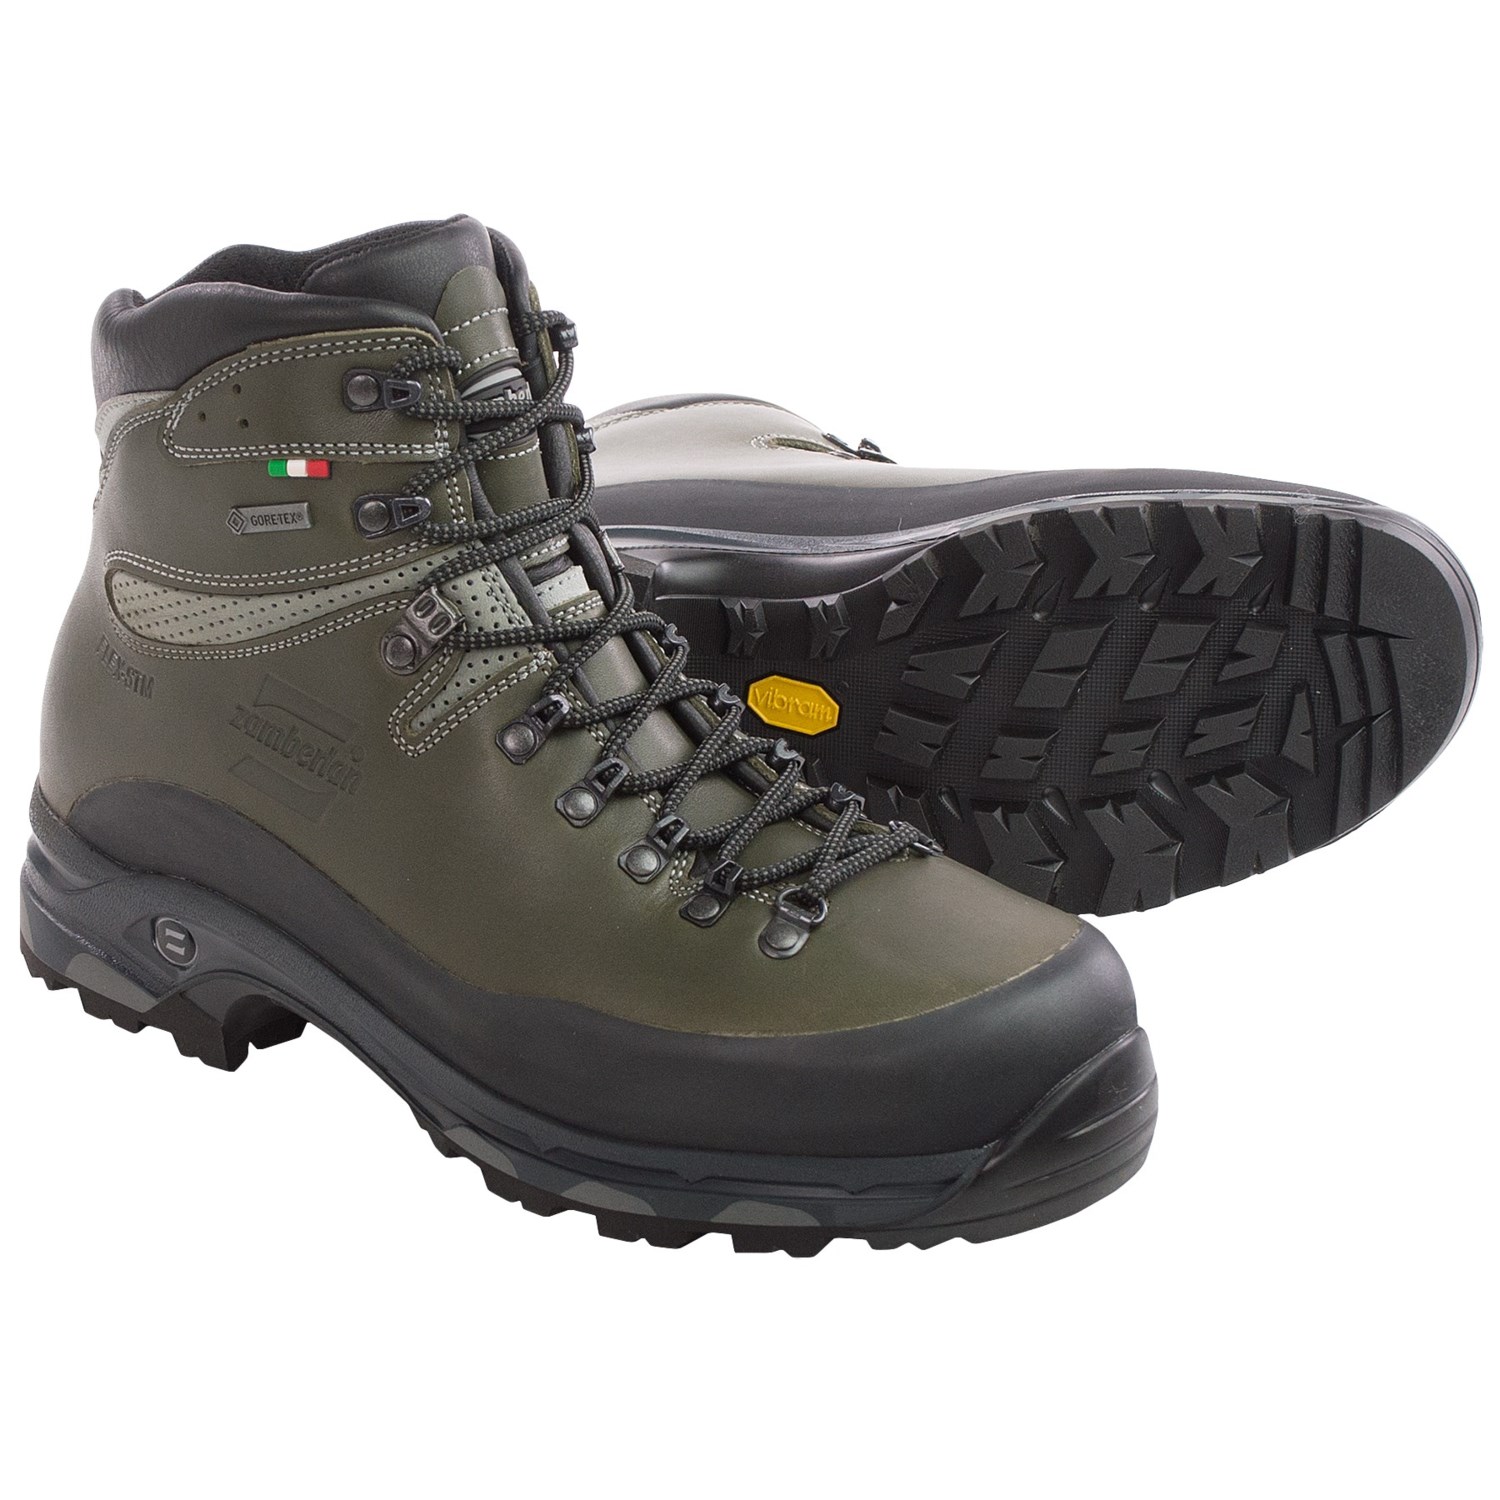 Zamberlan Vioz Plus Gore-Tex® RR Hunting Boots (For Men) 9947K - Save 32%